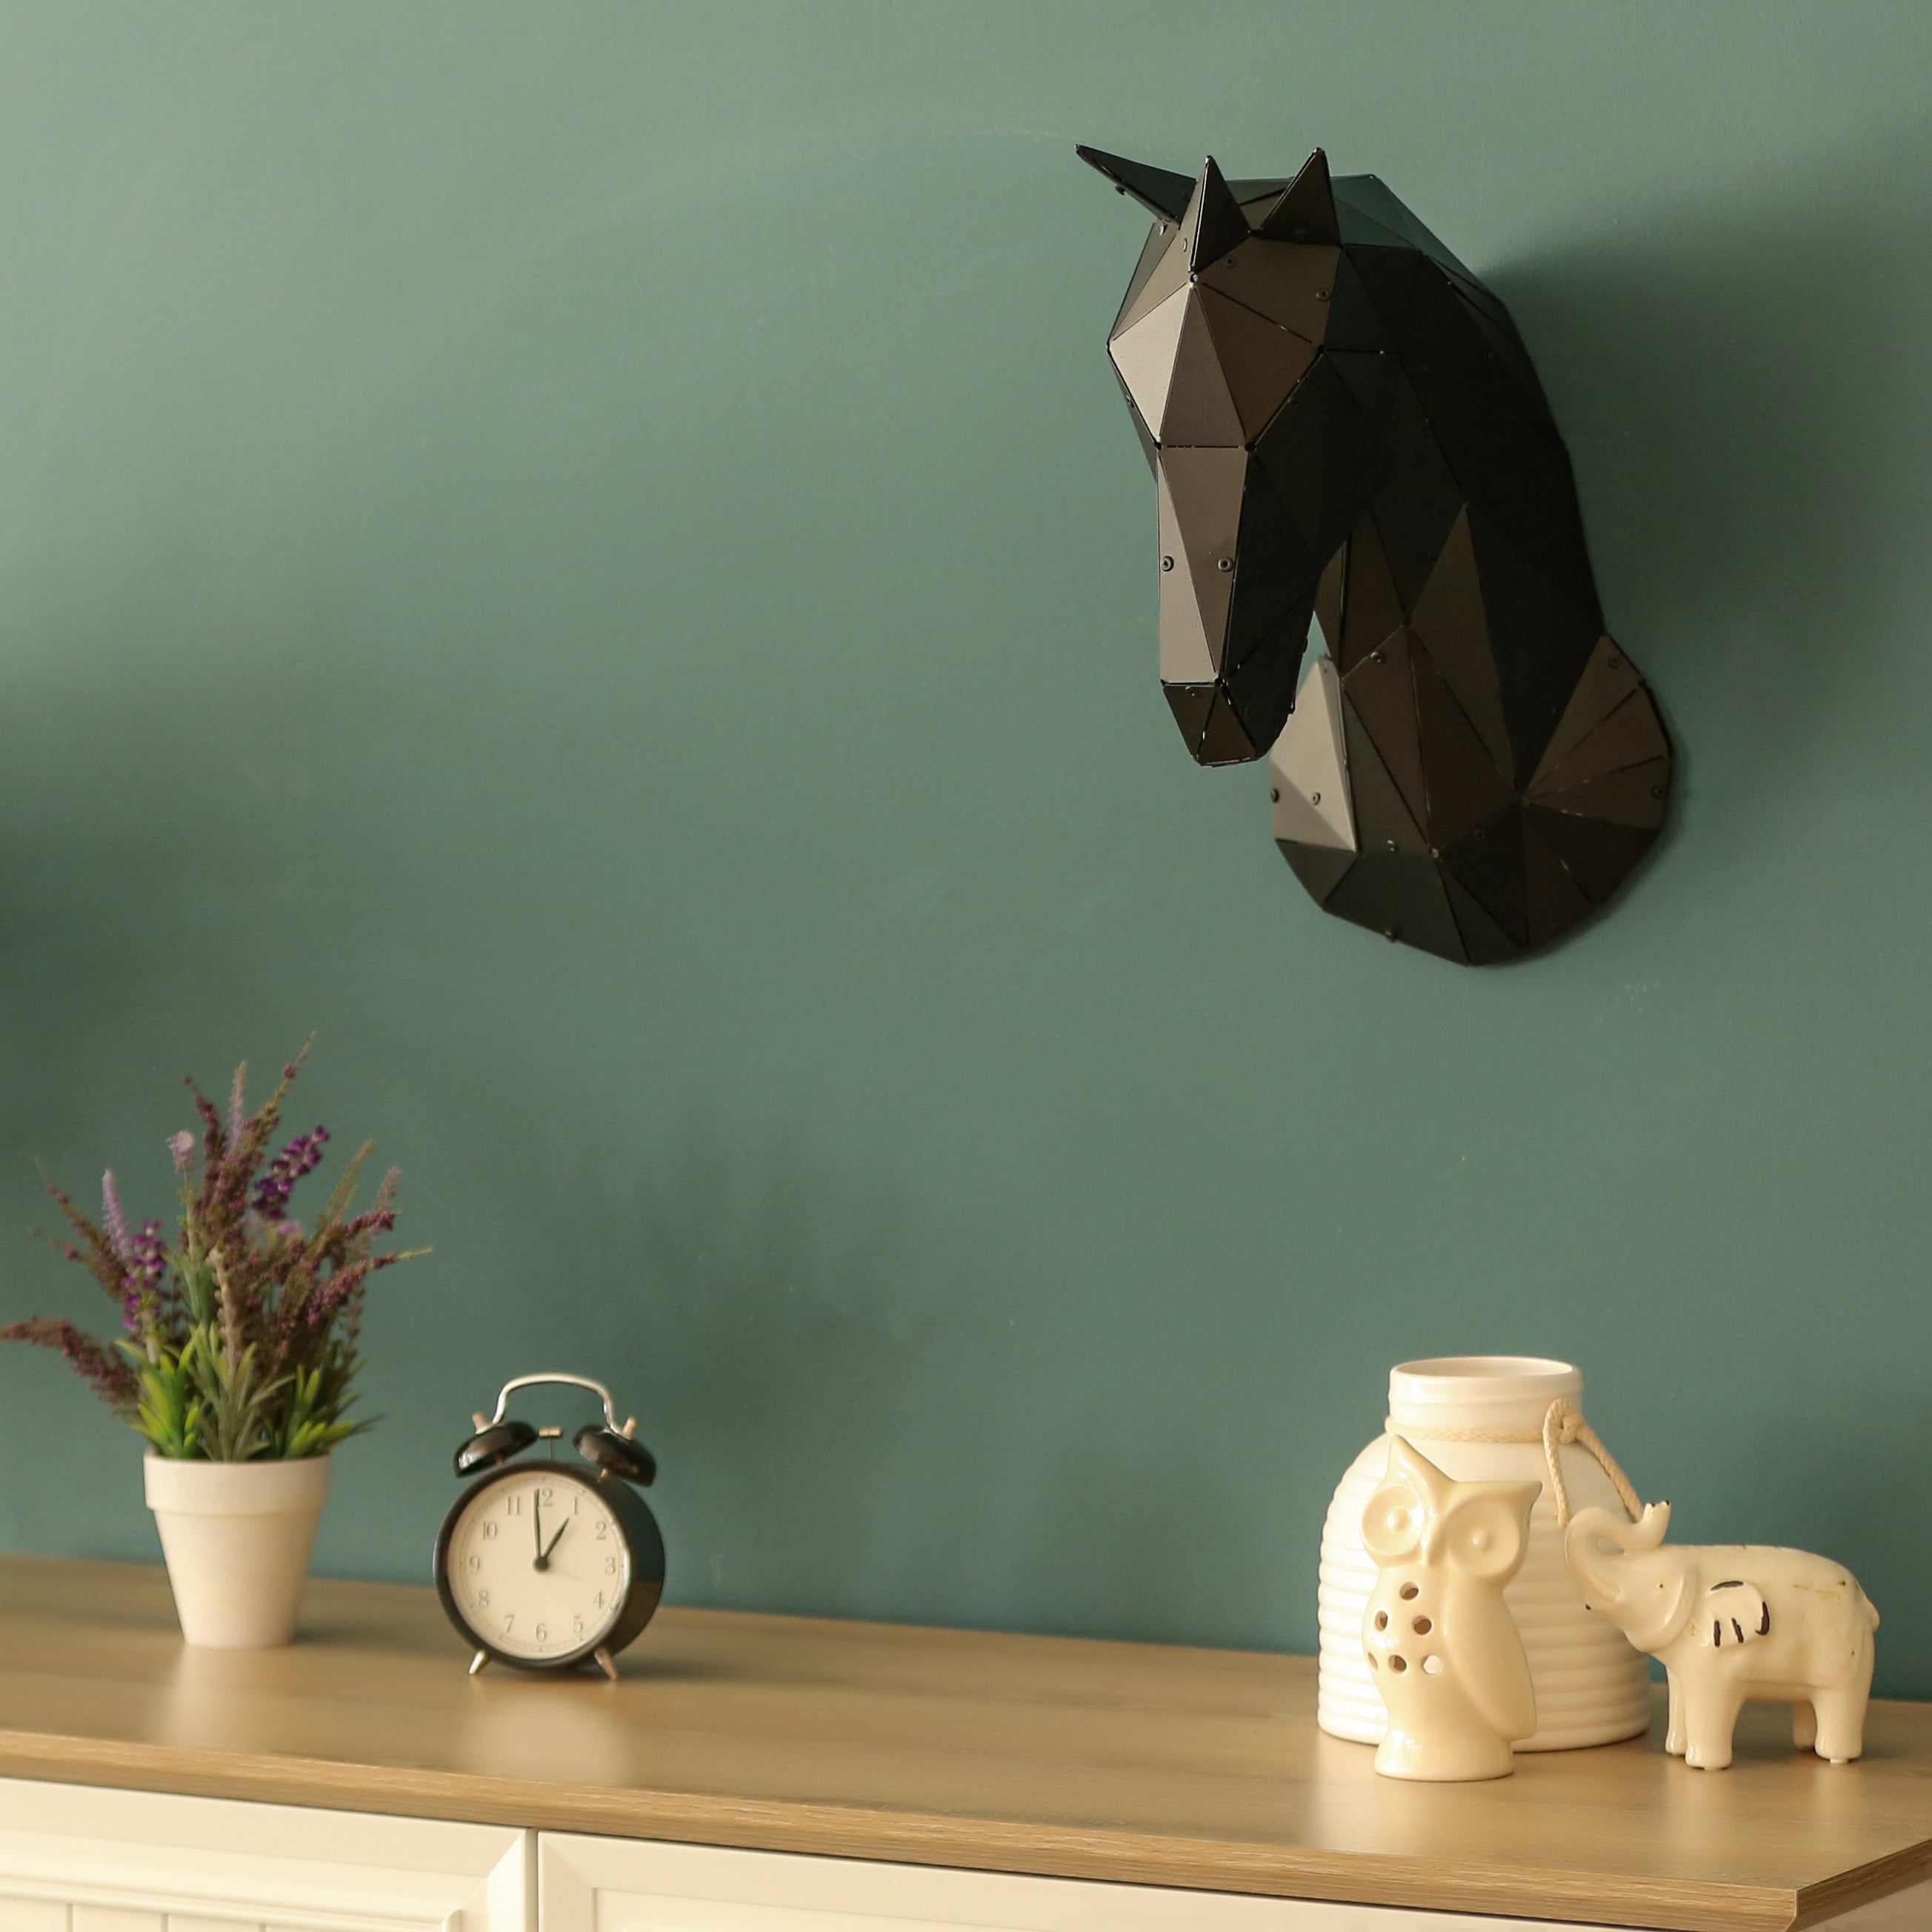 3D Geometric Wall Art of Horse